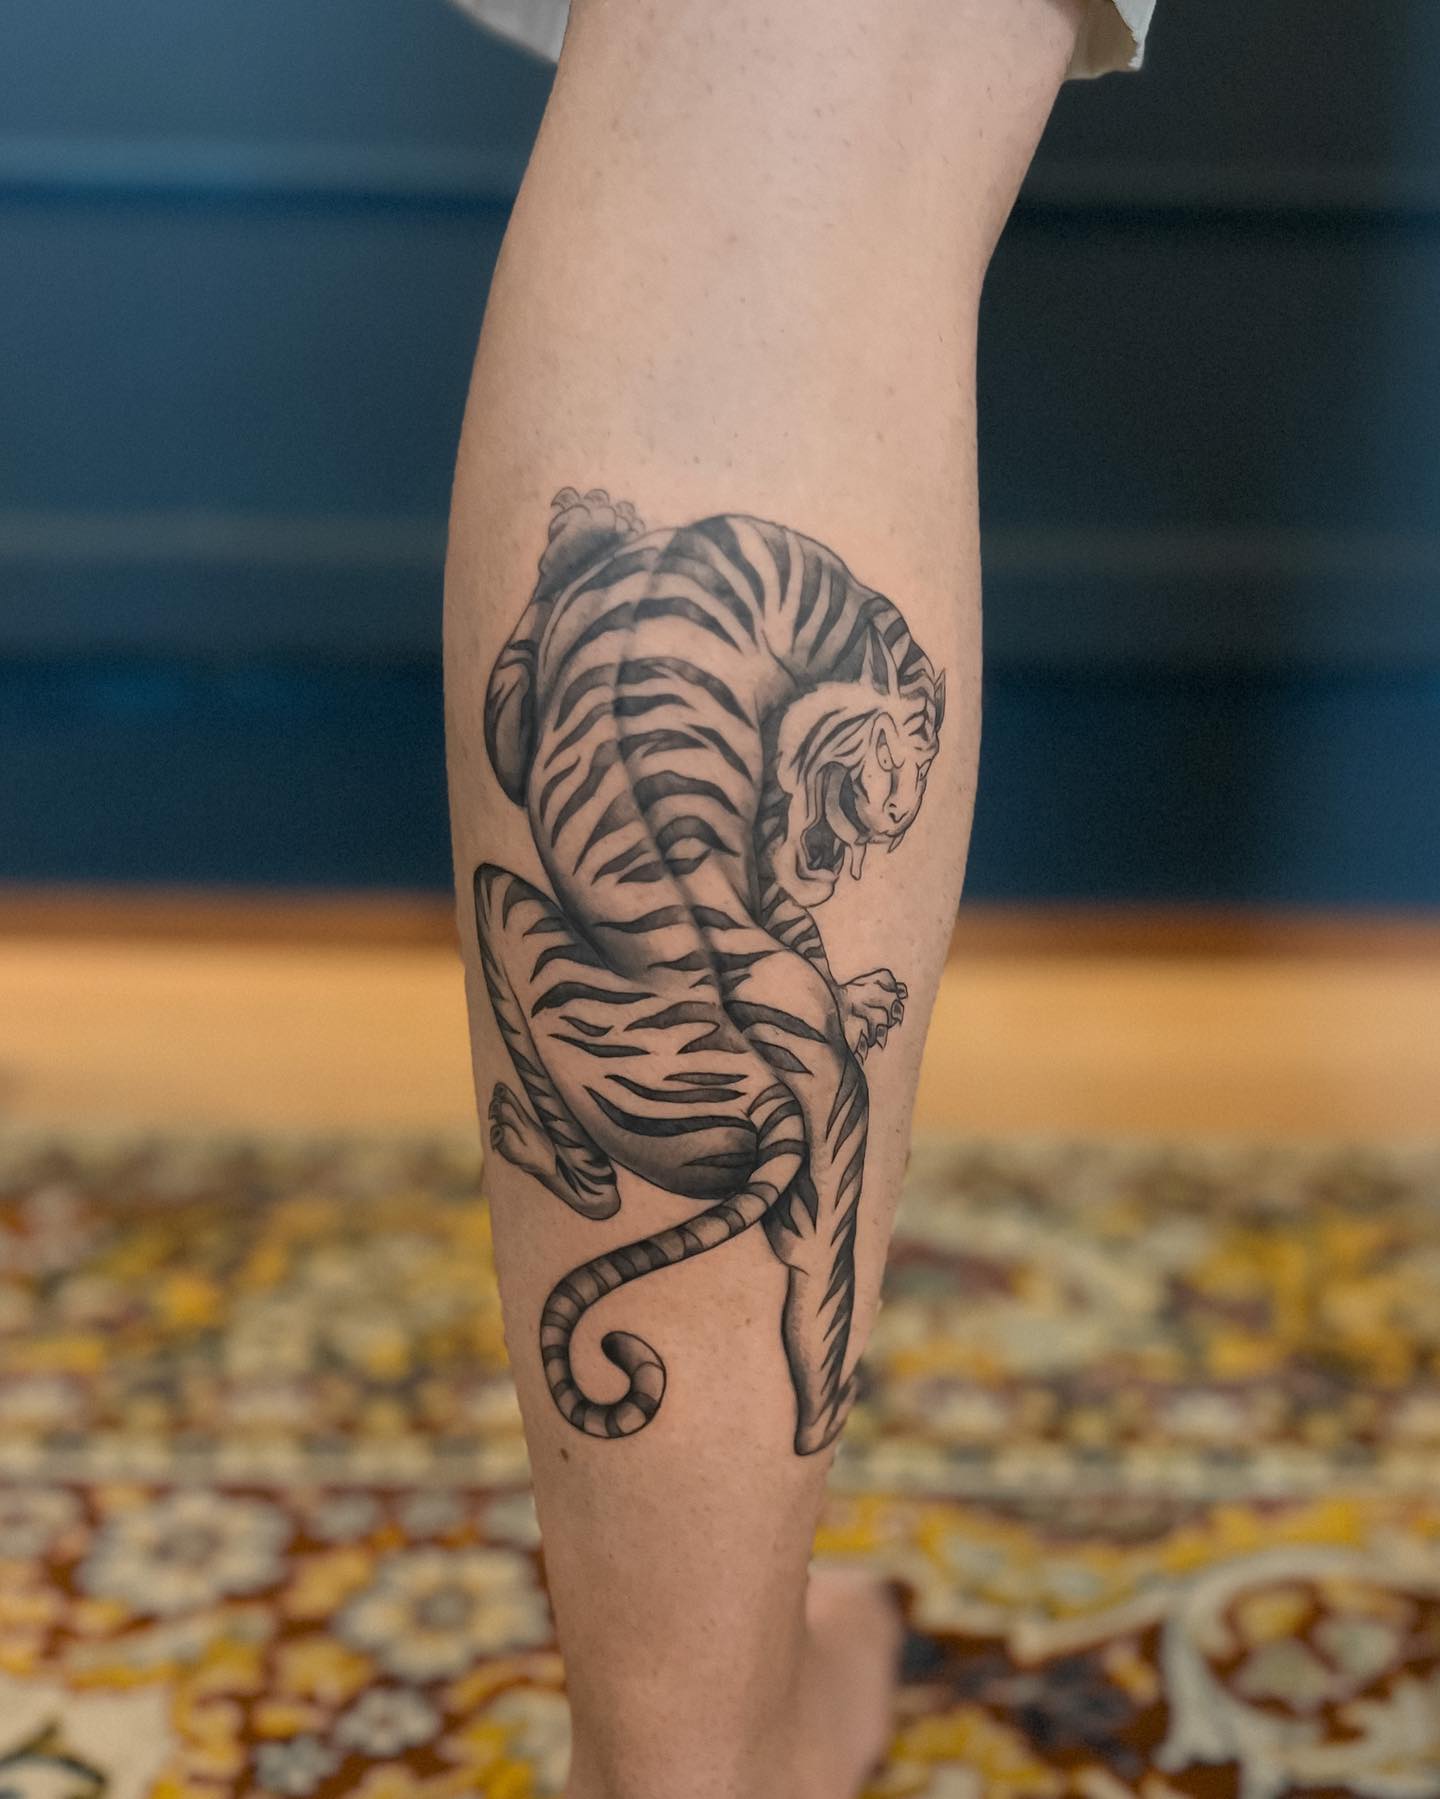 My Tattoo Story: Tam | Alison McGhee